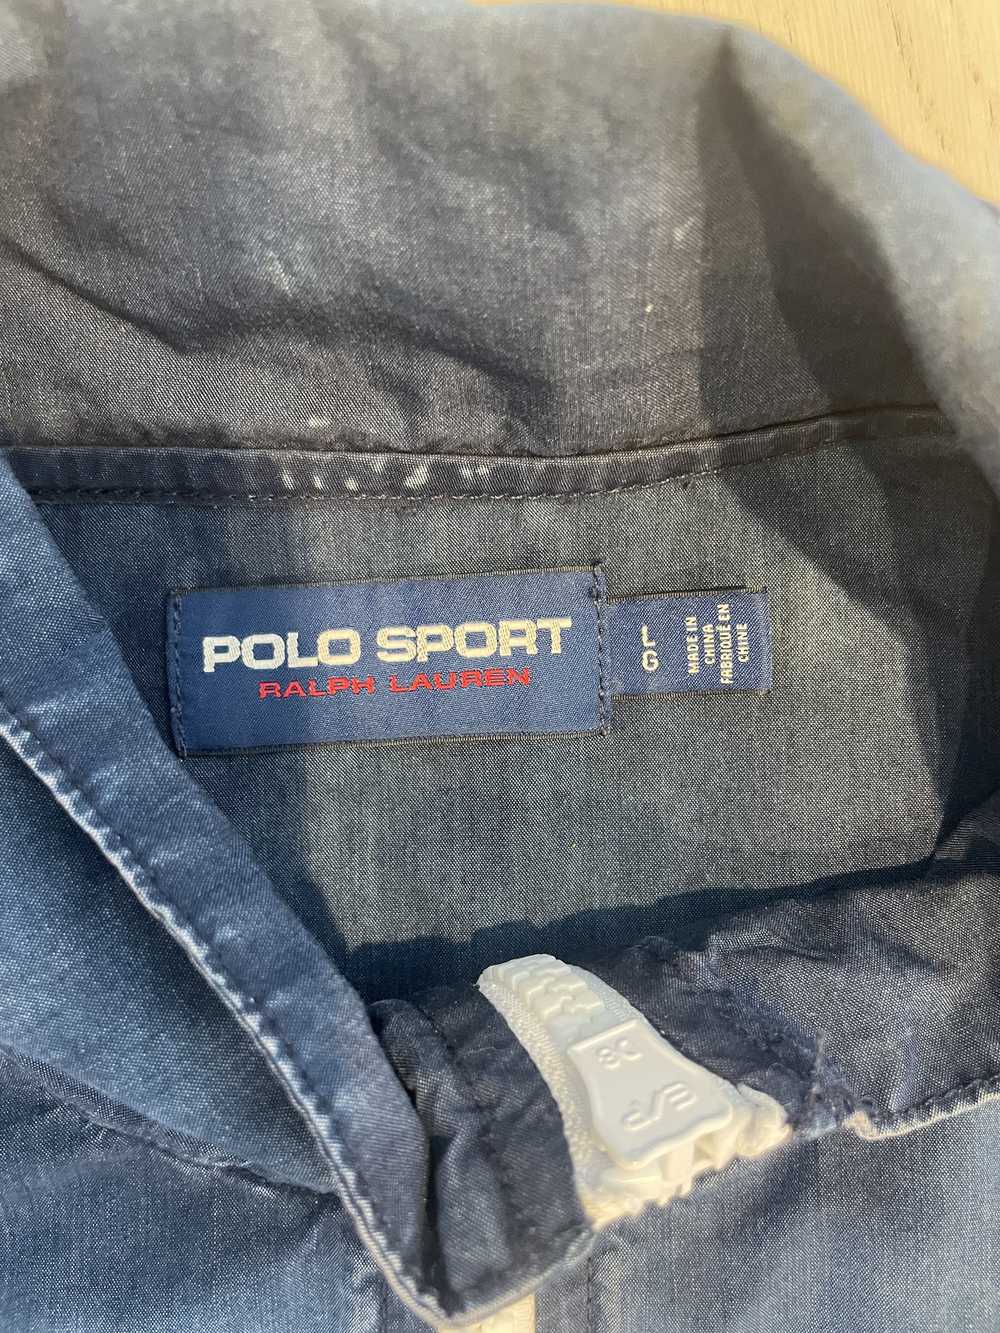 Polo Ralph Lauren Polo Ralph Lauren indigo jacket. - image 3